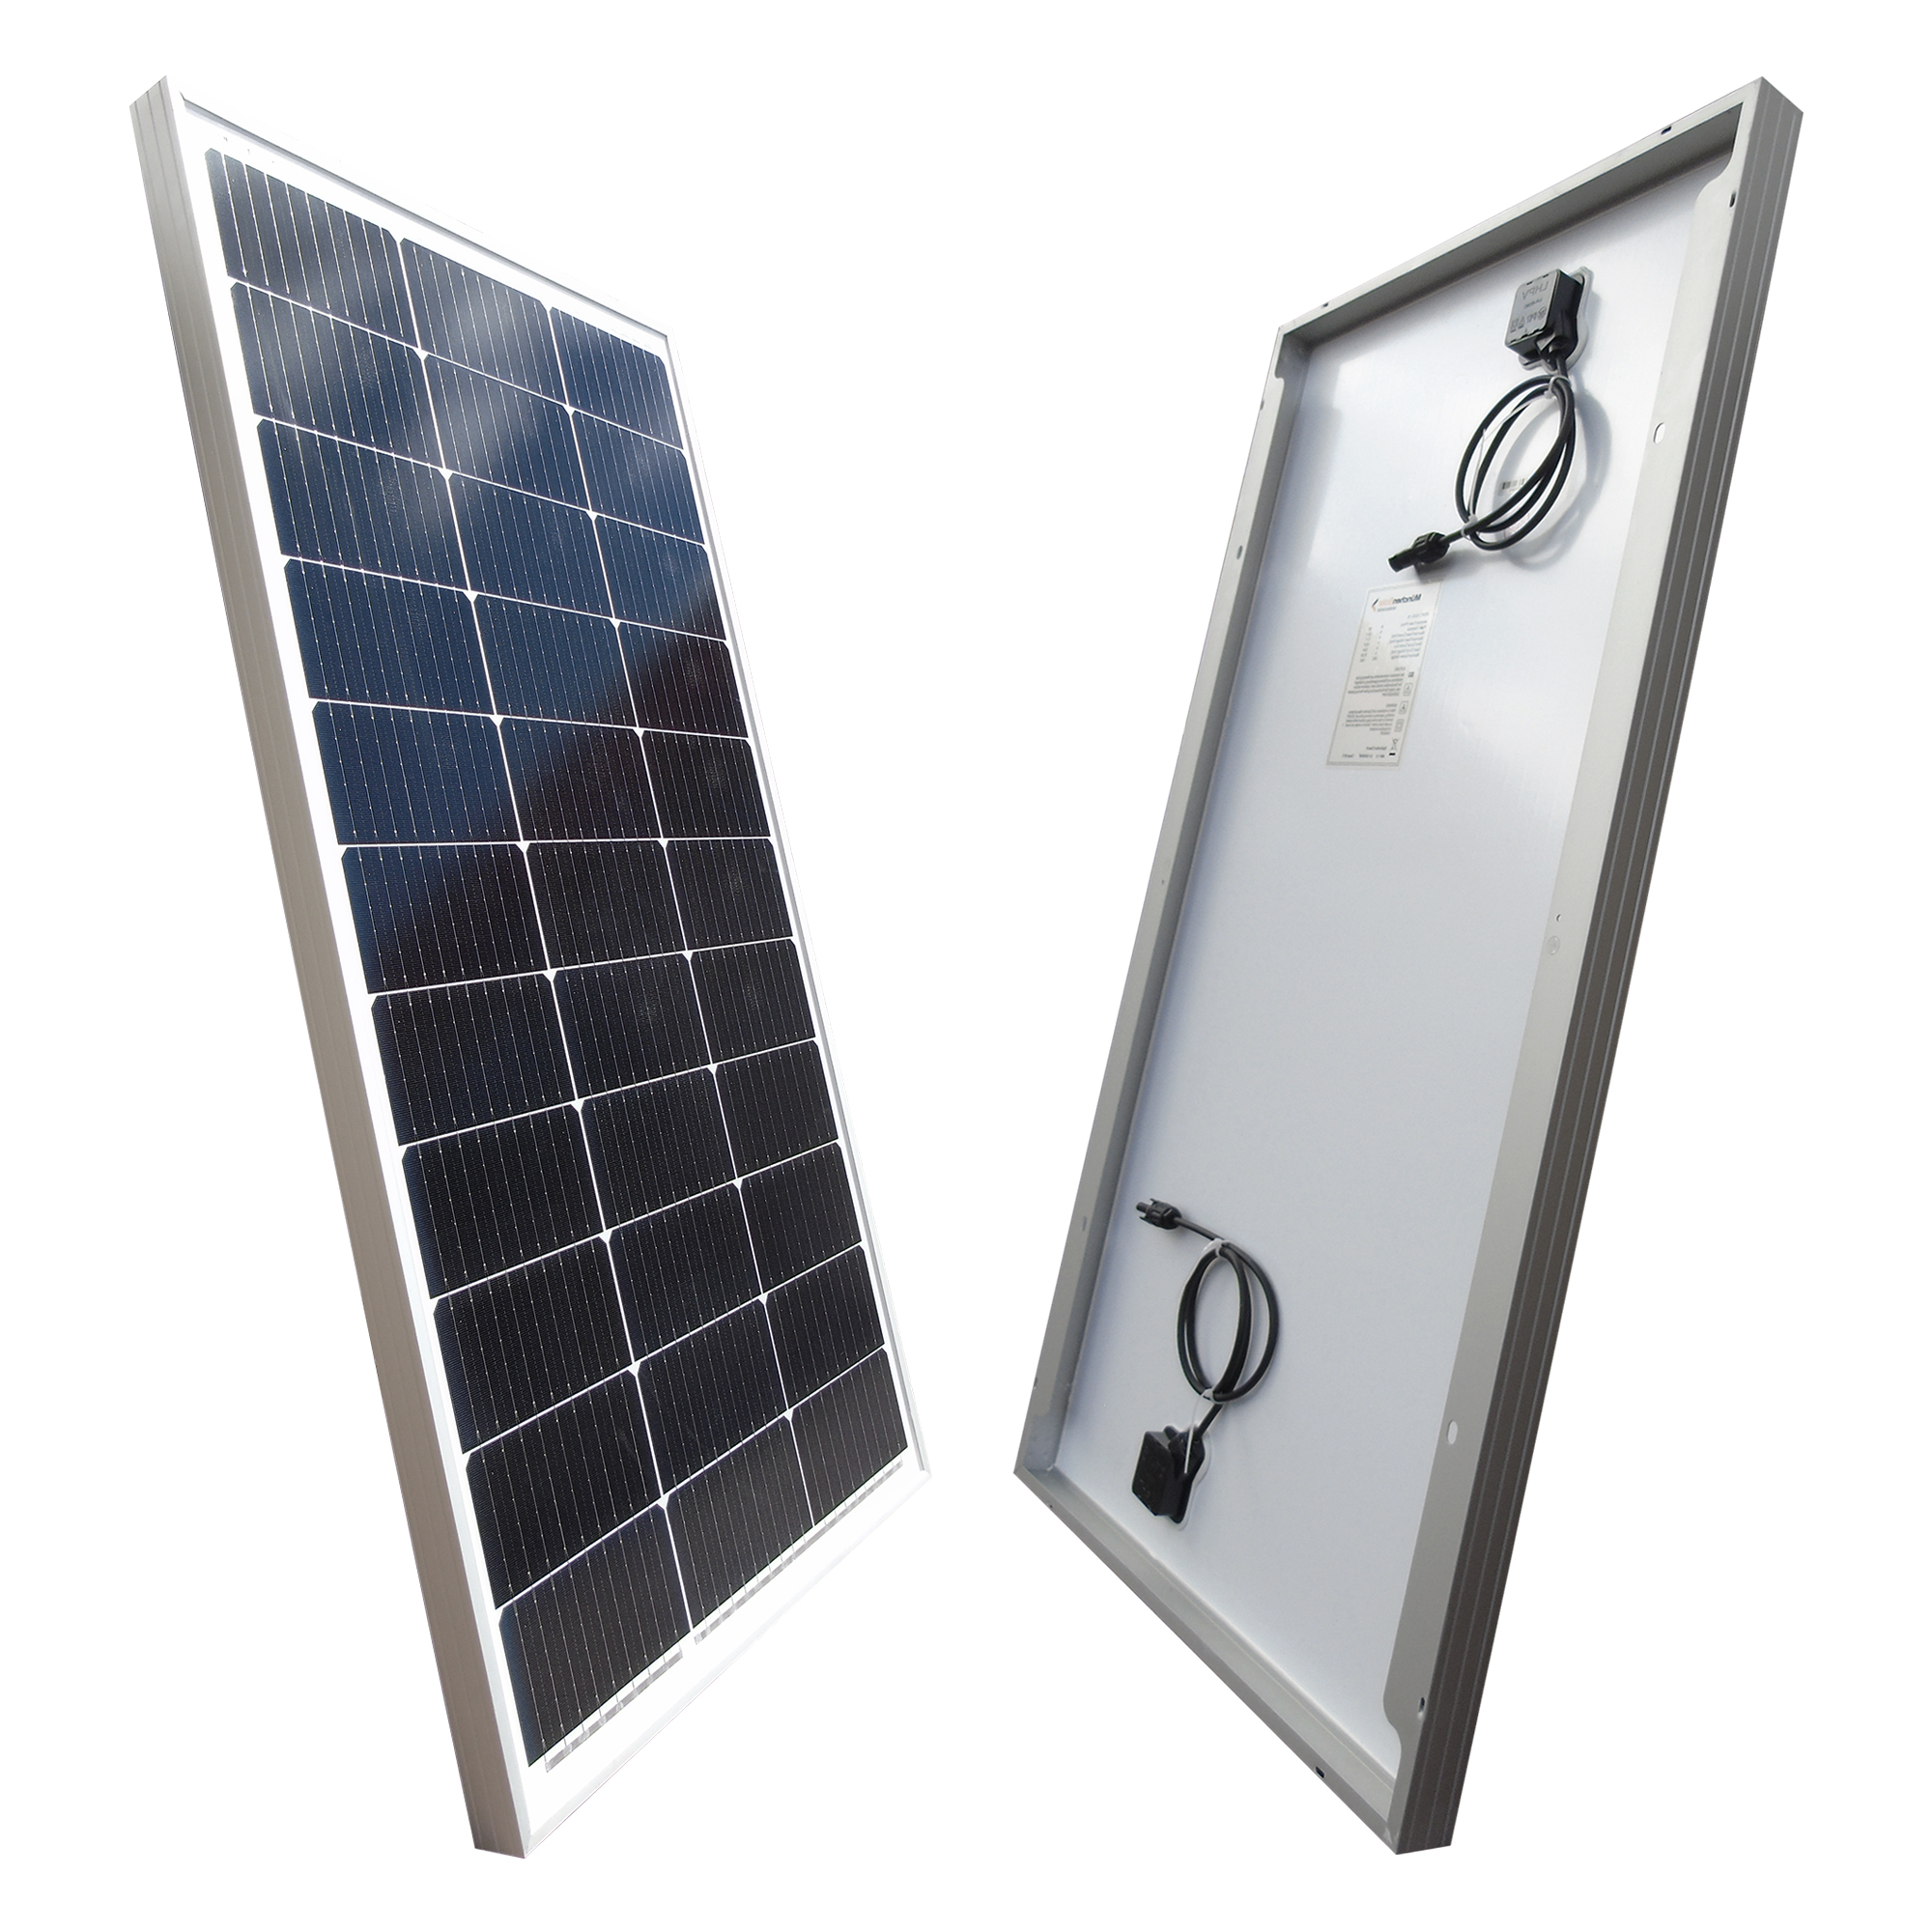 Caravan bau-tech Solarenergie 2 Stück 100W Polikristallines Solarpanel 12V Solarmodul Solarzelle 100Watt für Camping Garten GmbH 